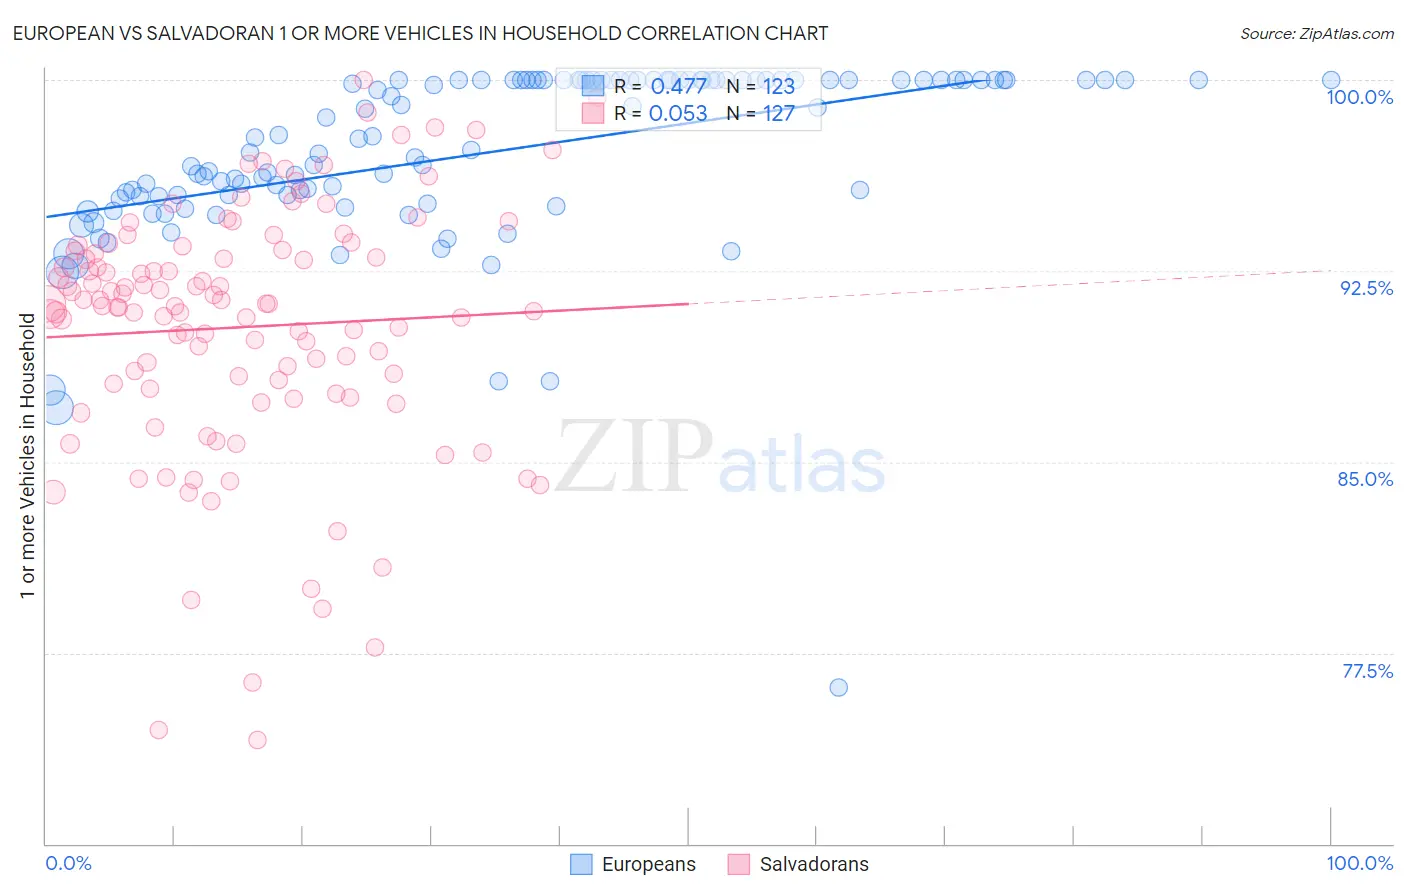 European vs Salvadoran 1 or more Vehicles in Household